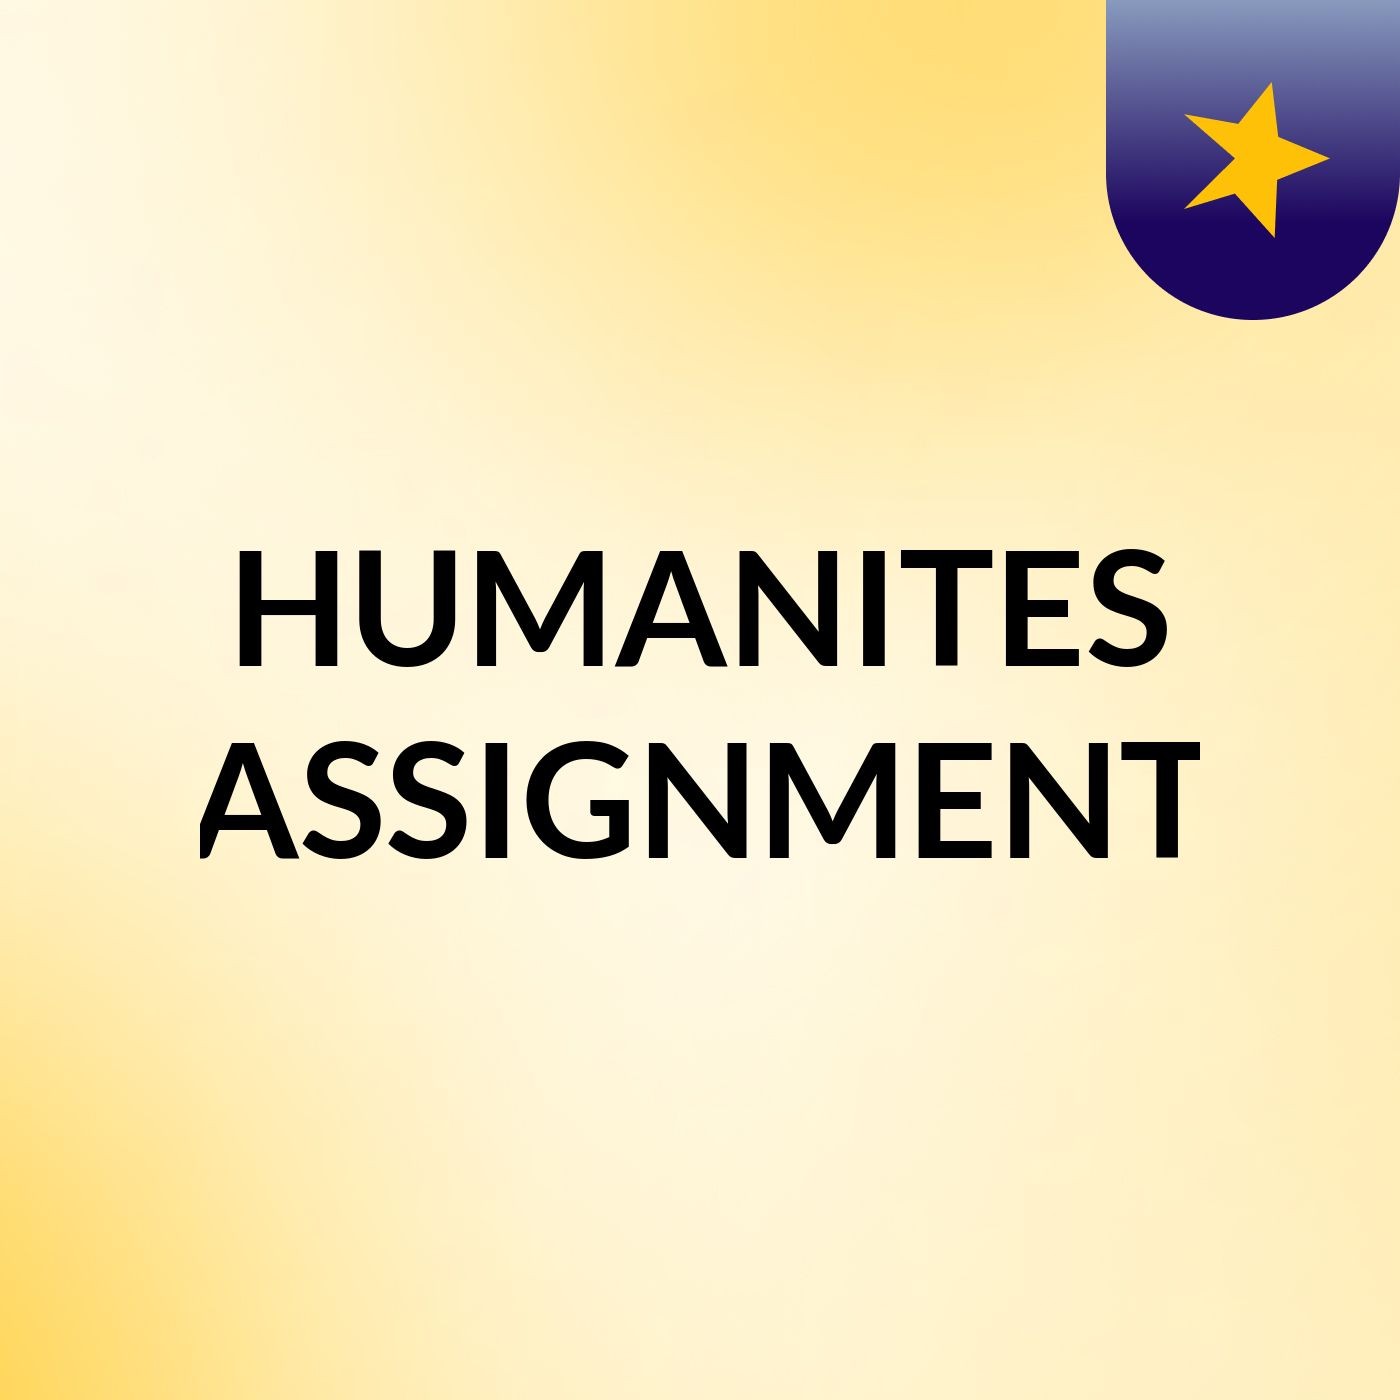 HUMANITES ASSIGNMENT